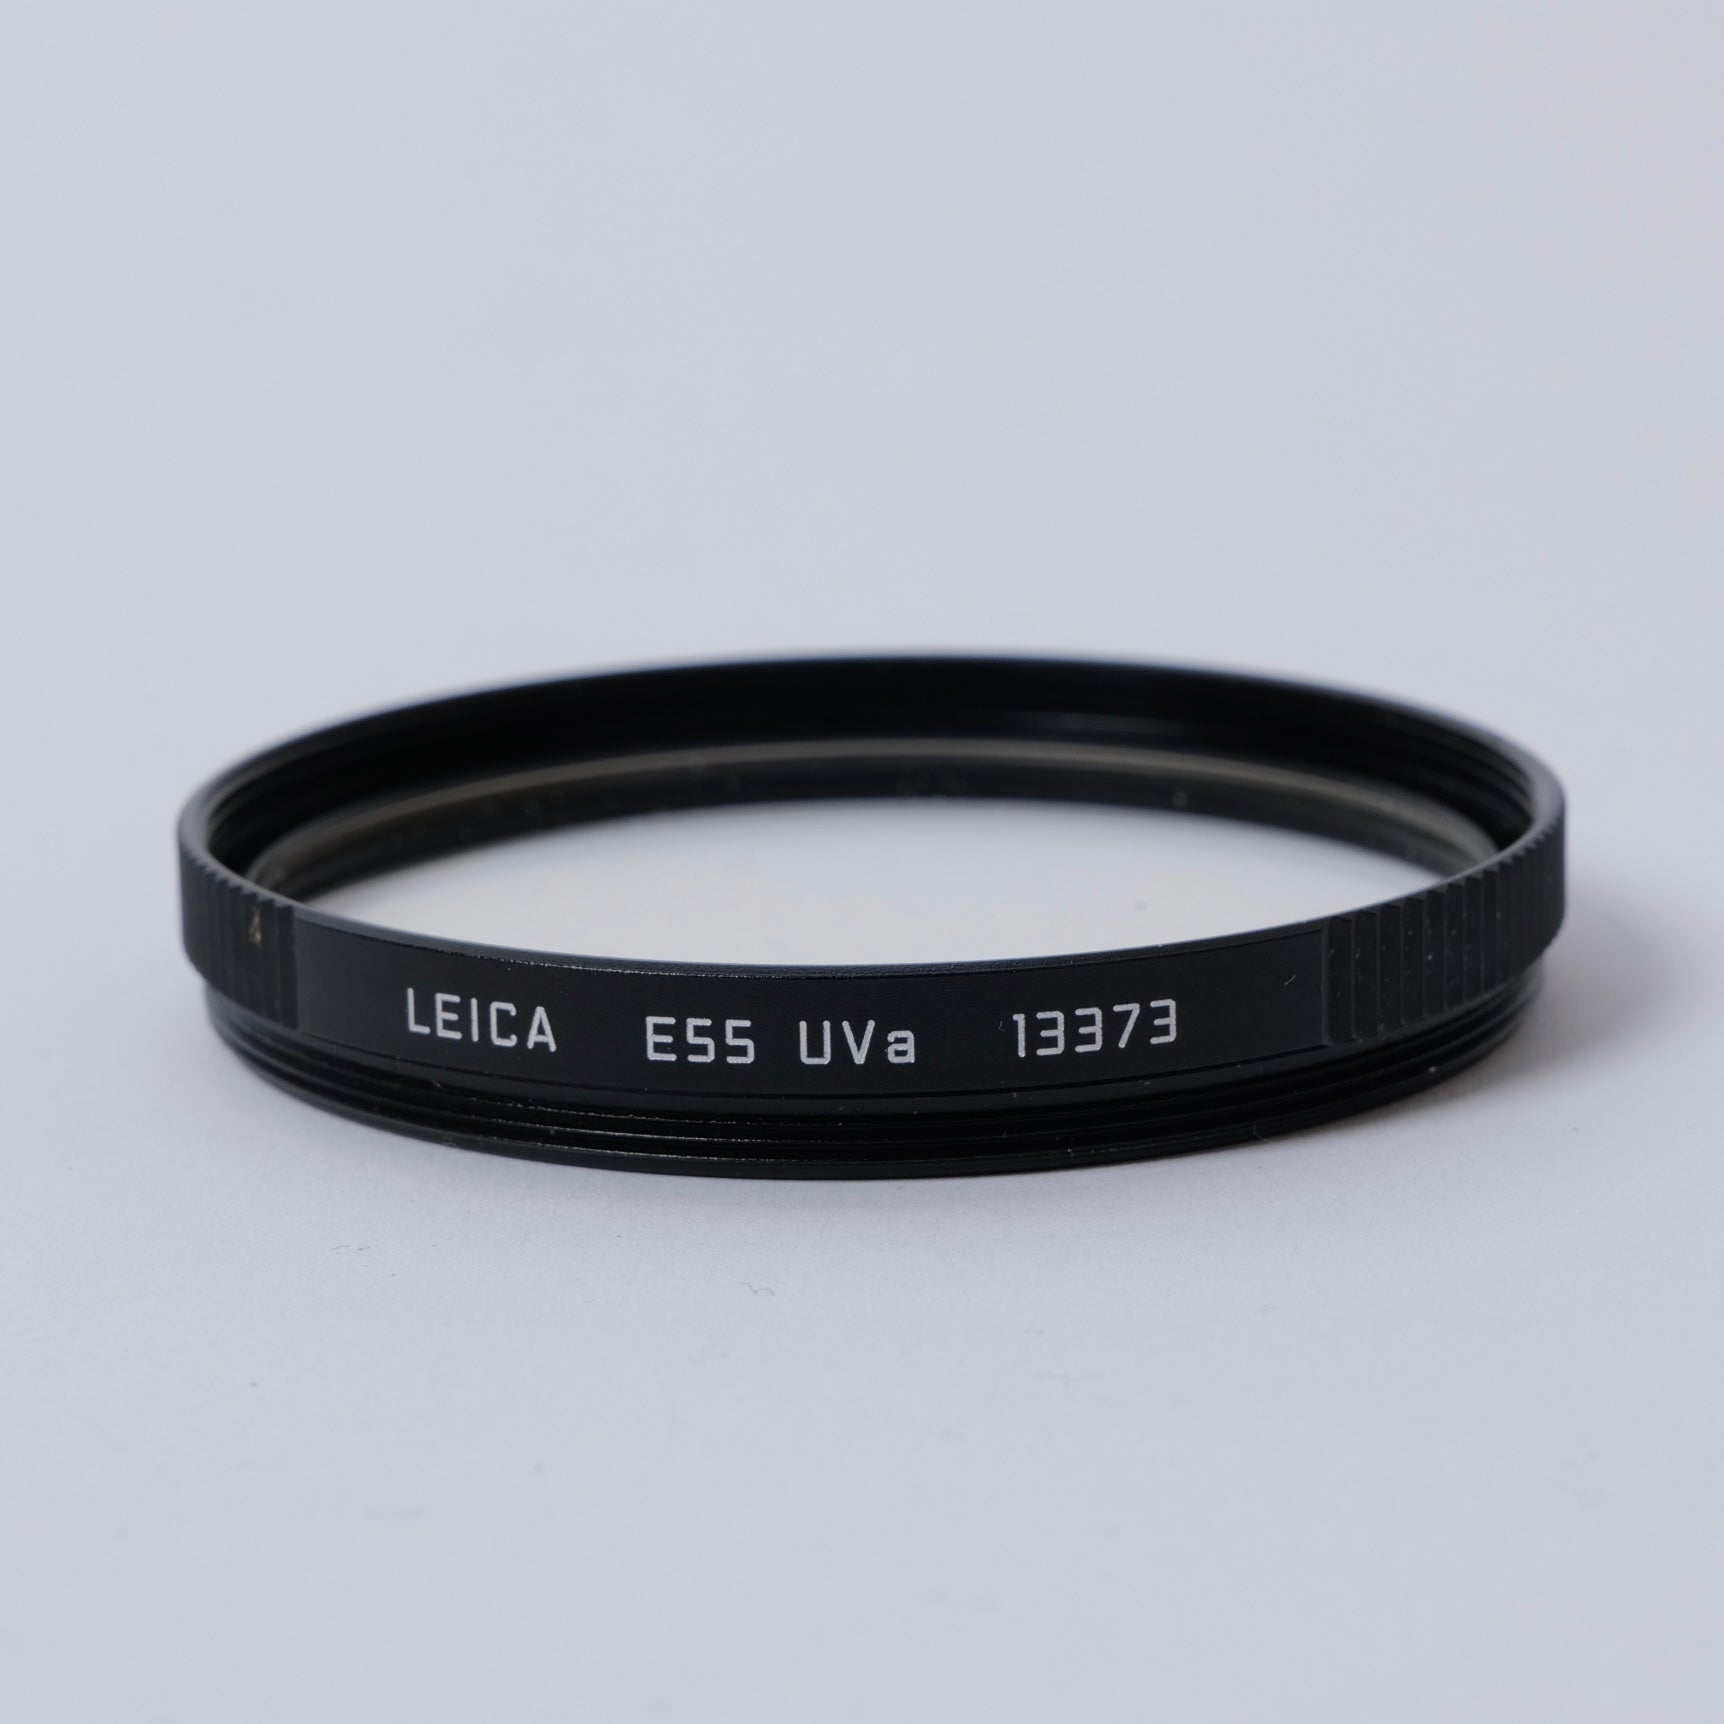 Leica UVa Filter E55